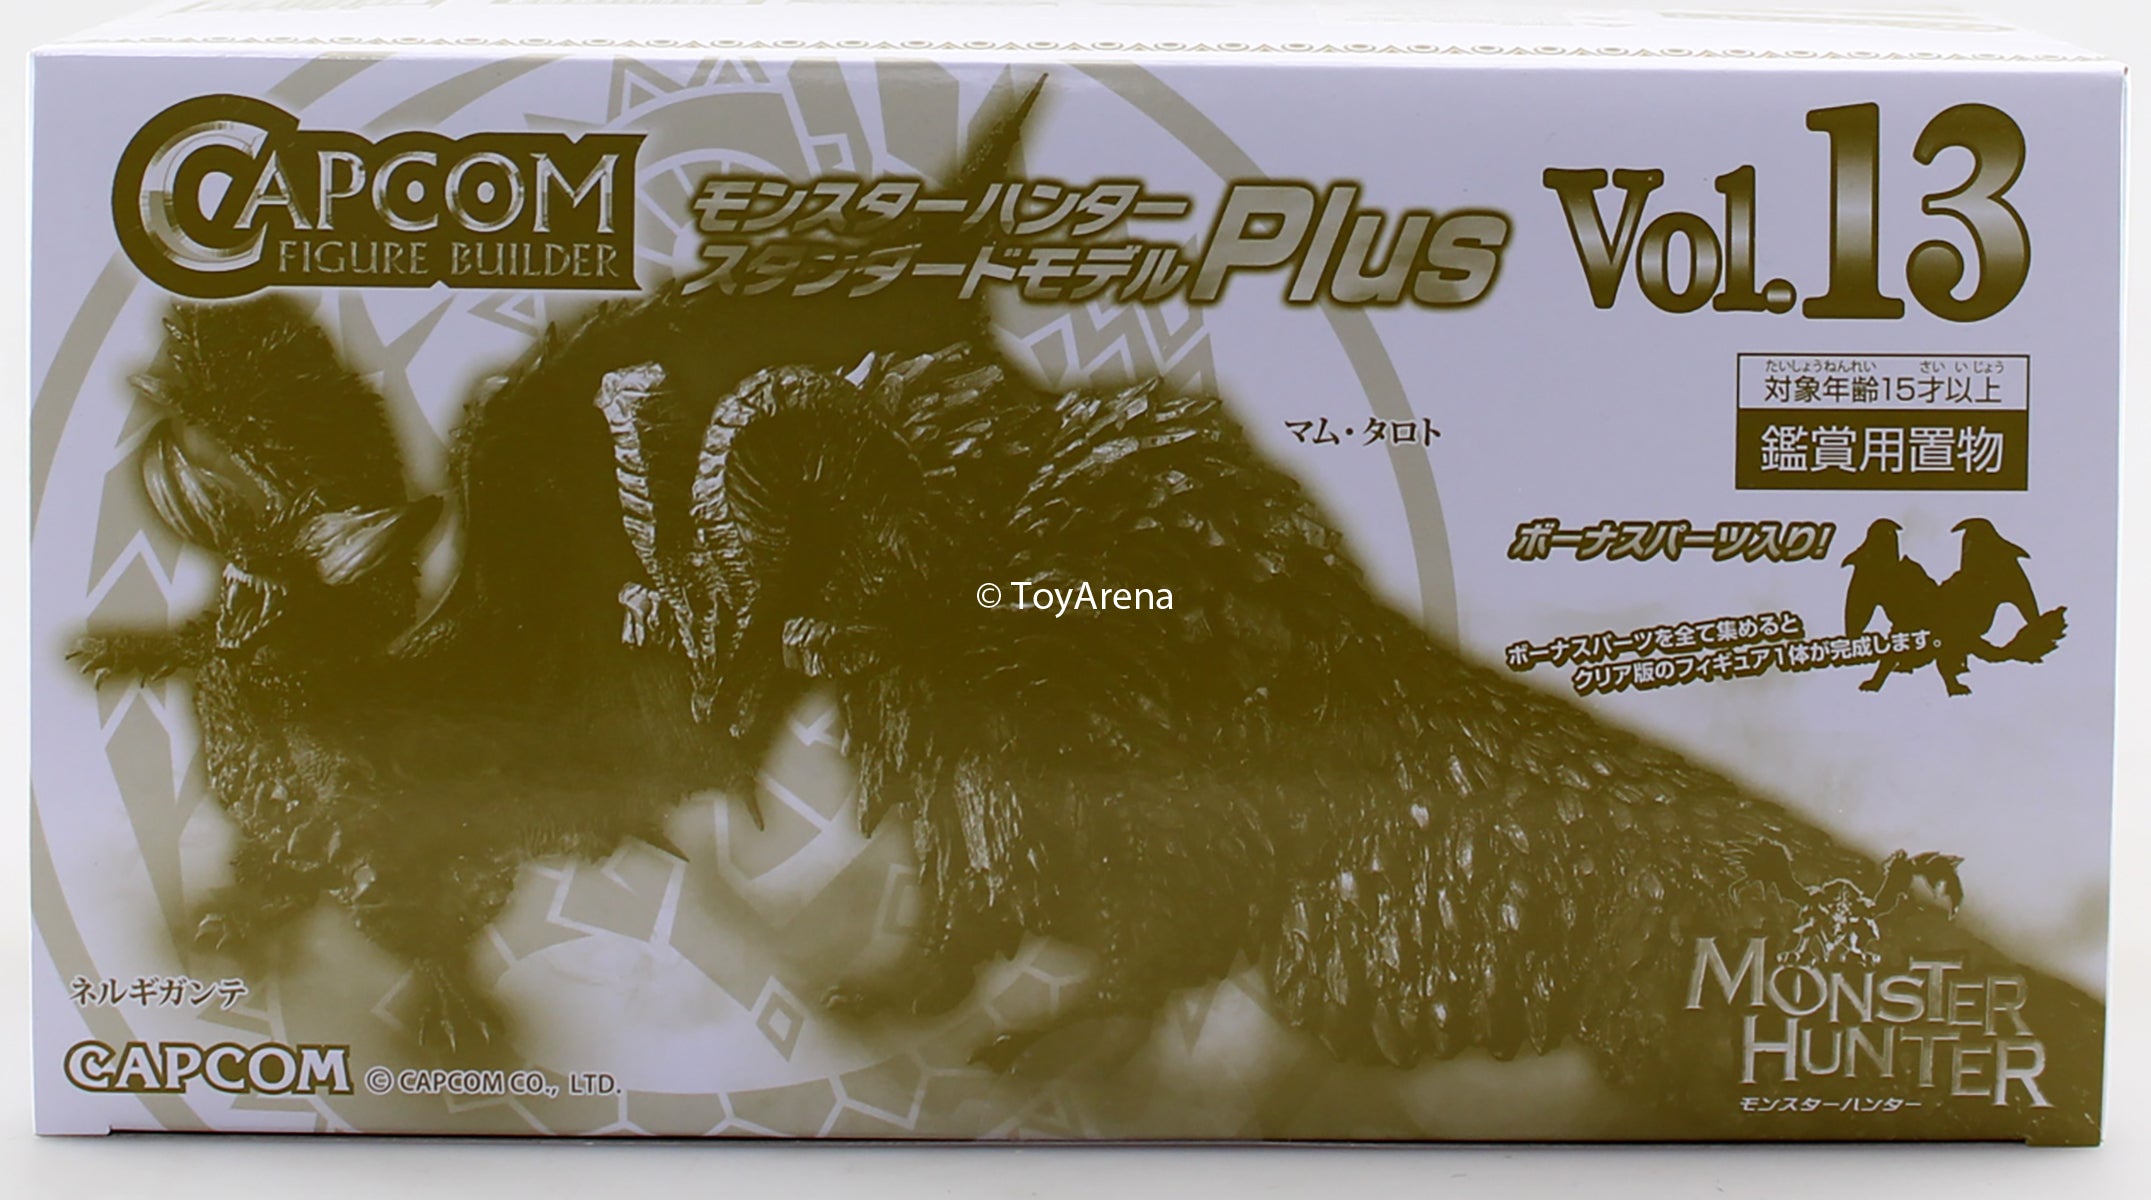 Capcom Figure Builder Monster Hunter Plus Vol 13 Trading Figures Box Set of 6